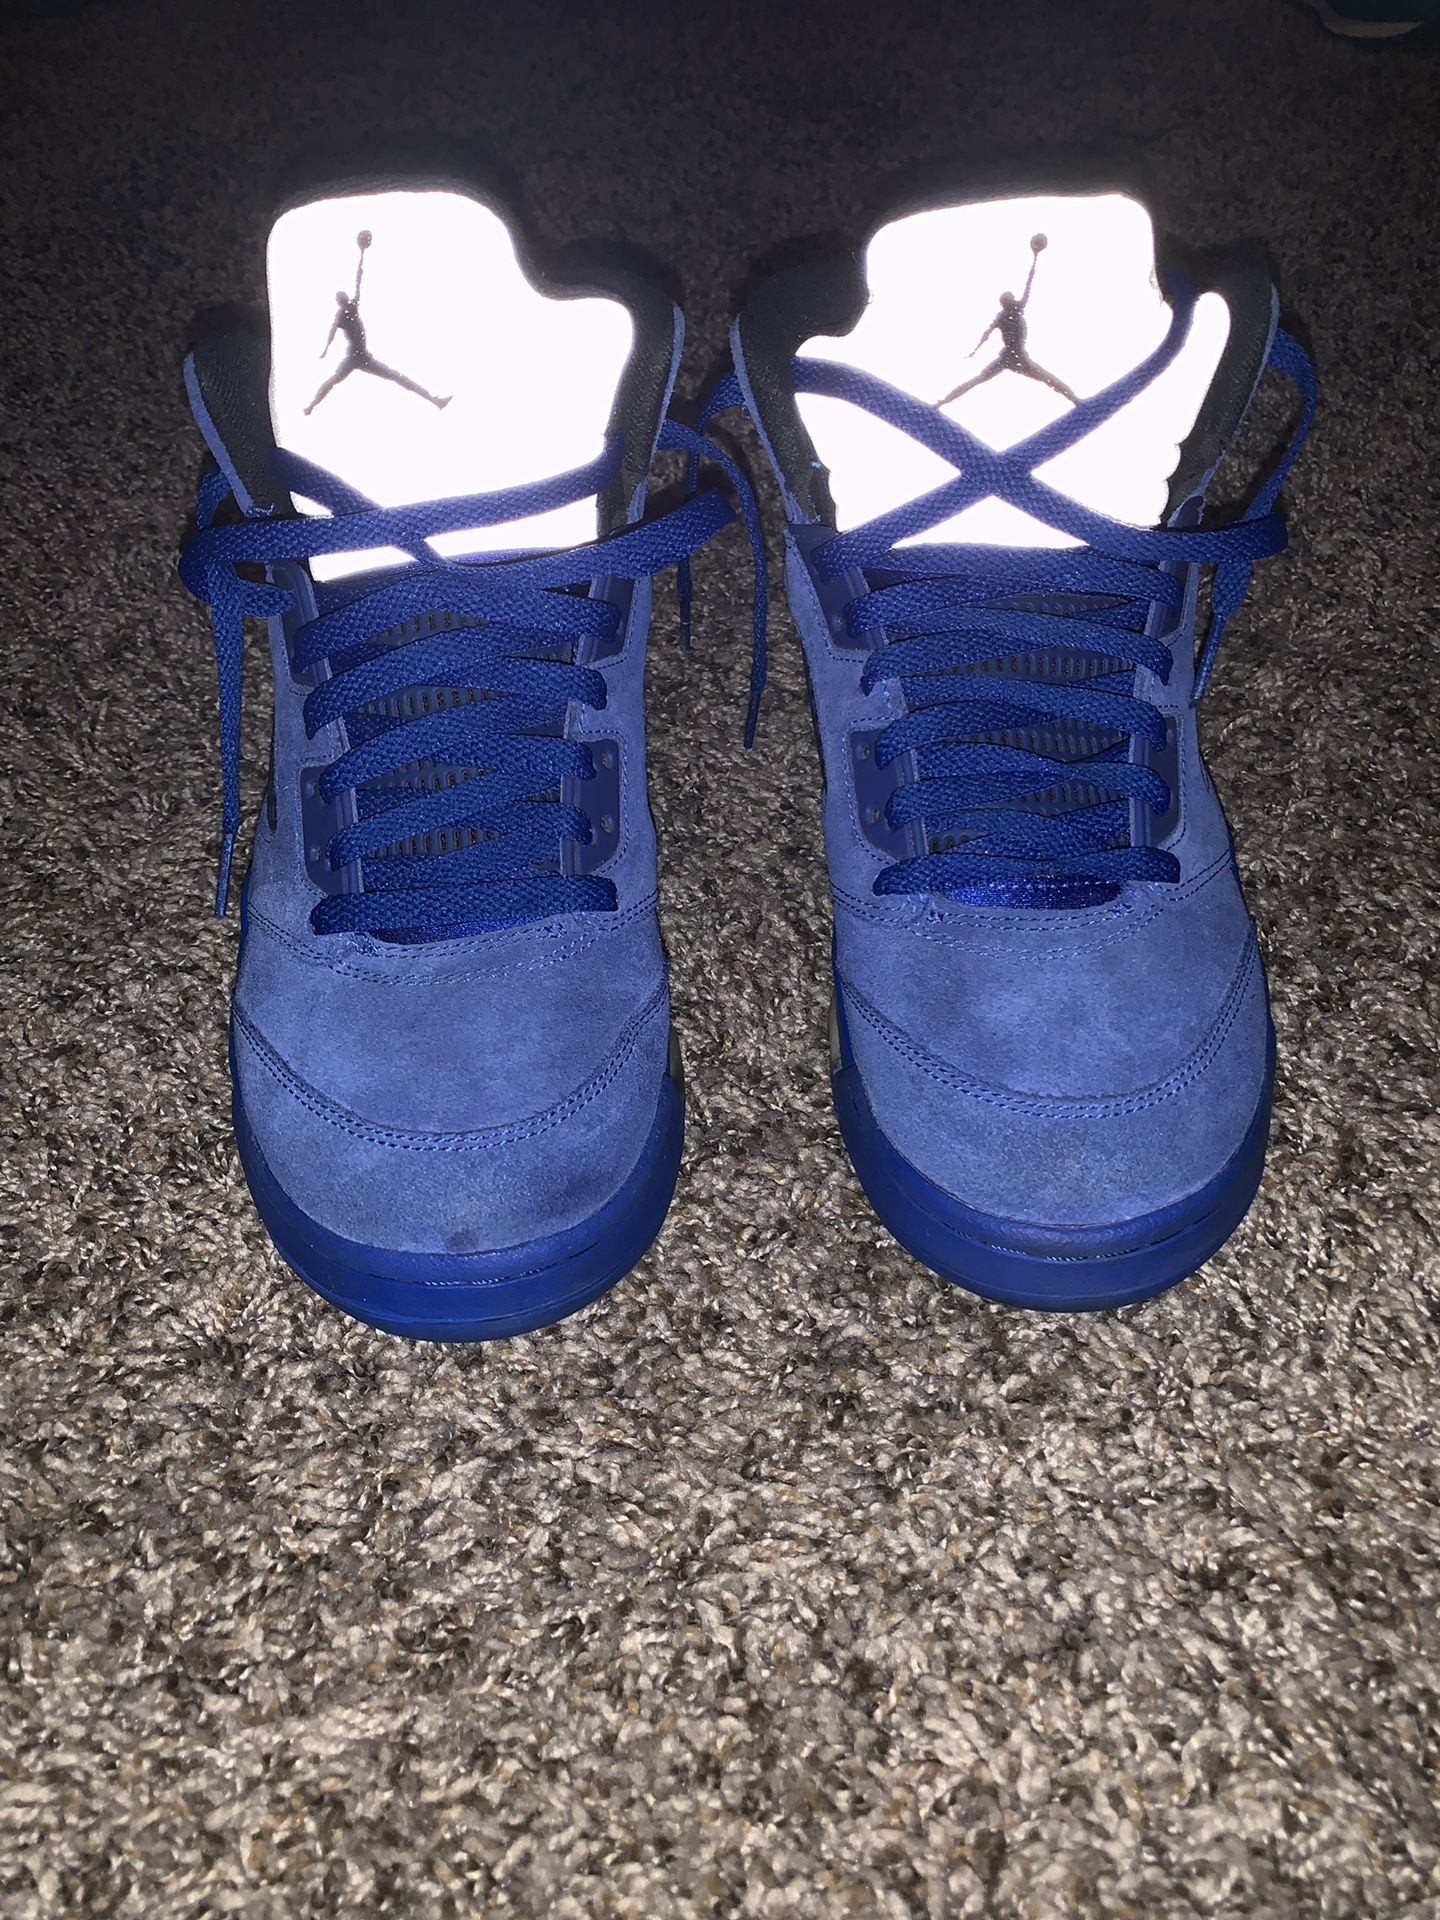 Blue retro Jordan 5s